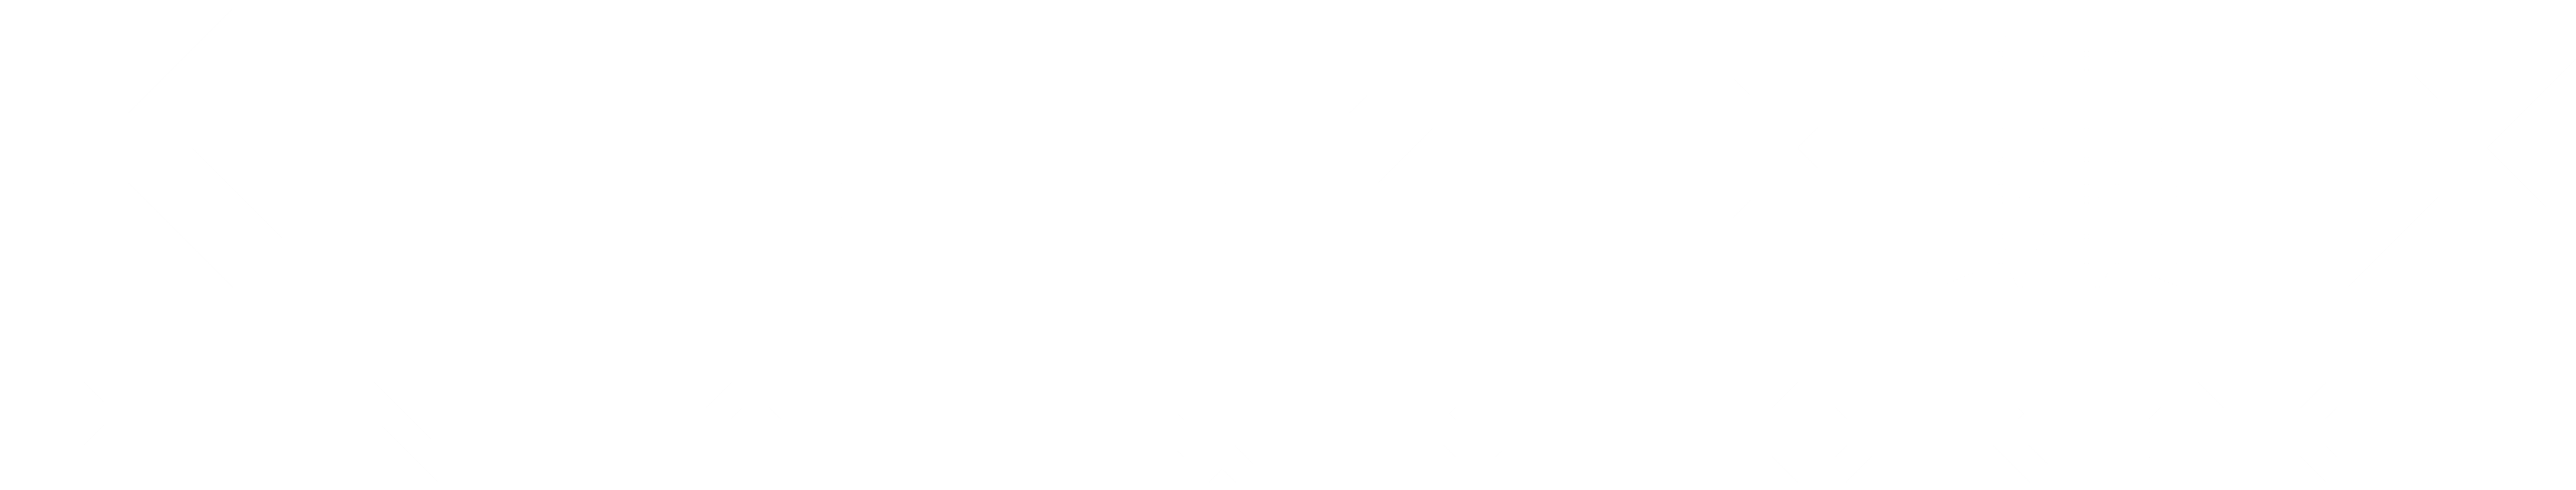 keepbox logo